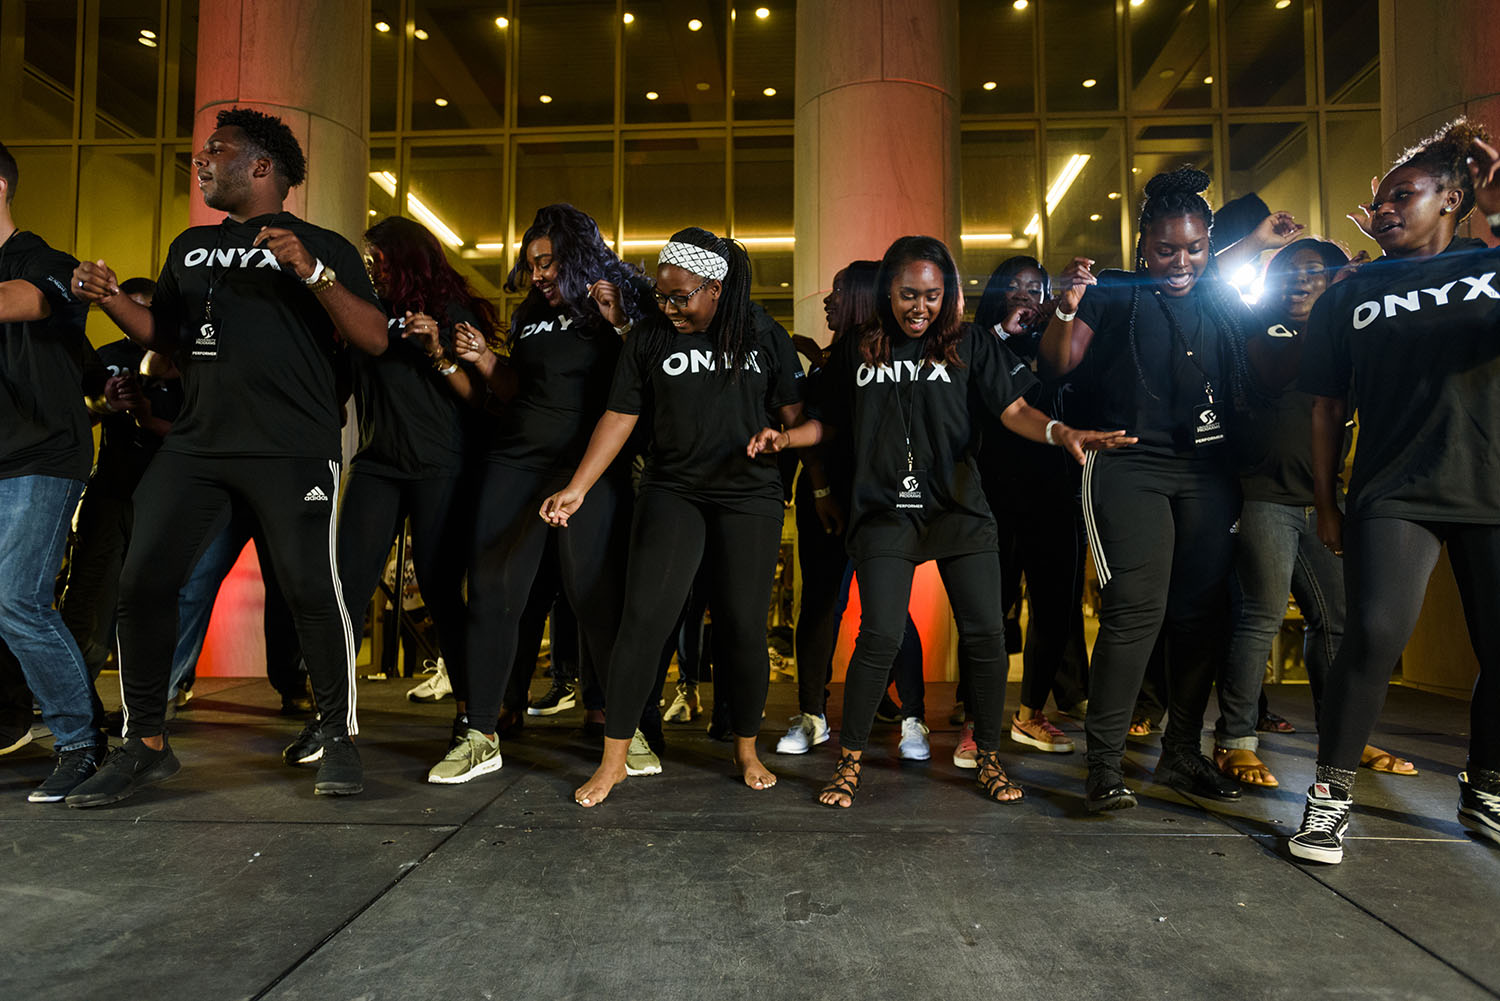 University Programs and UA Black Student Union to Host Onyx 2018